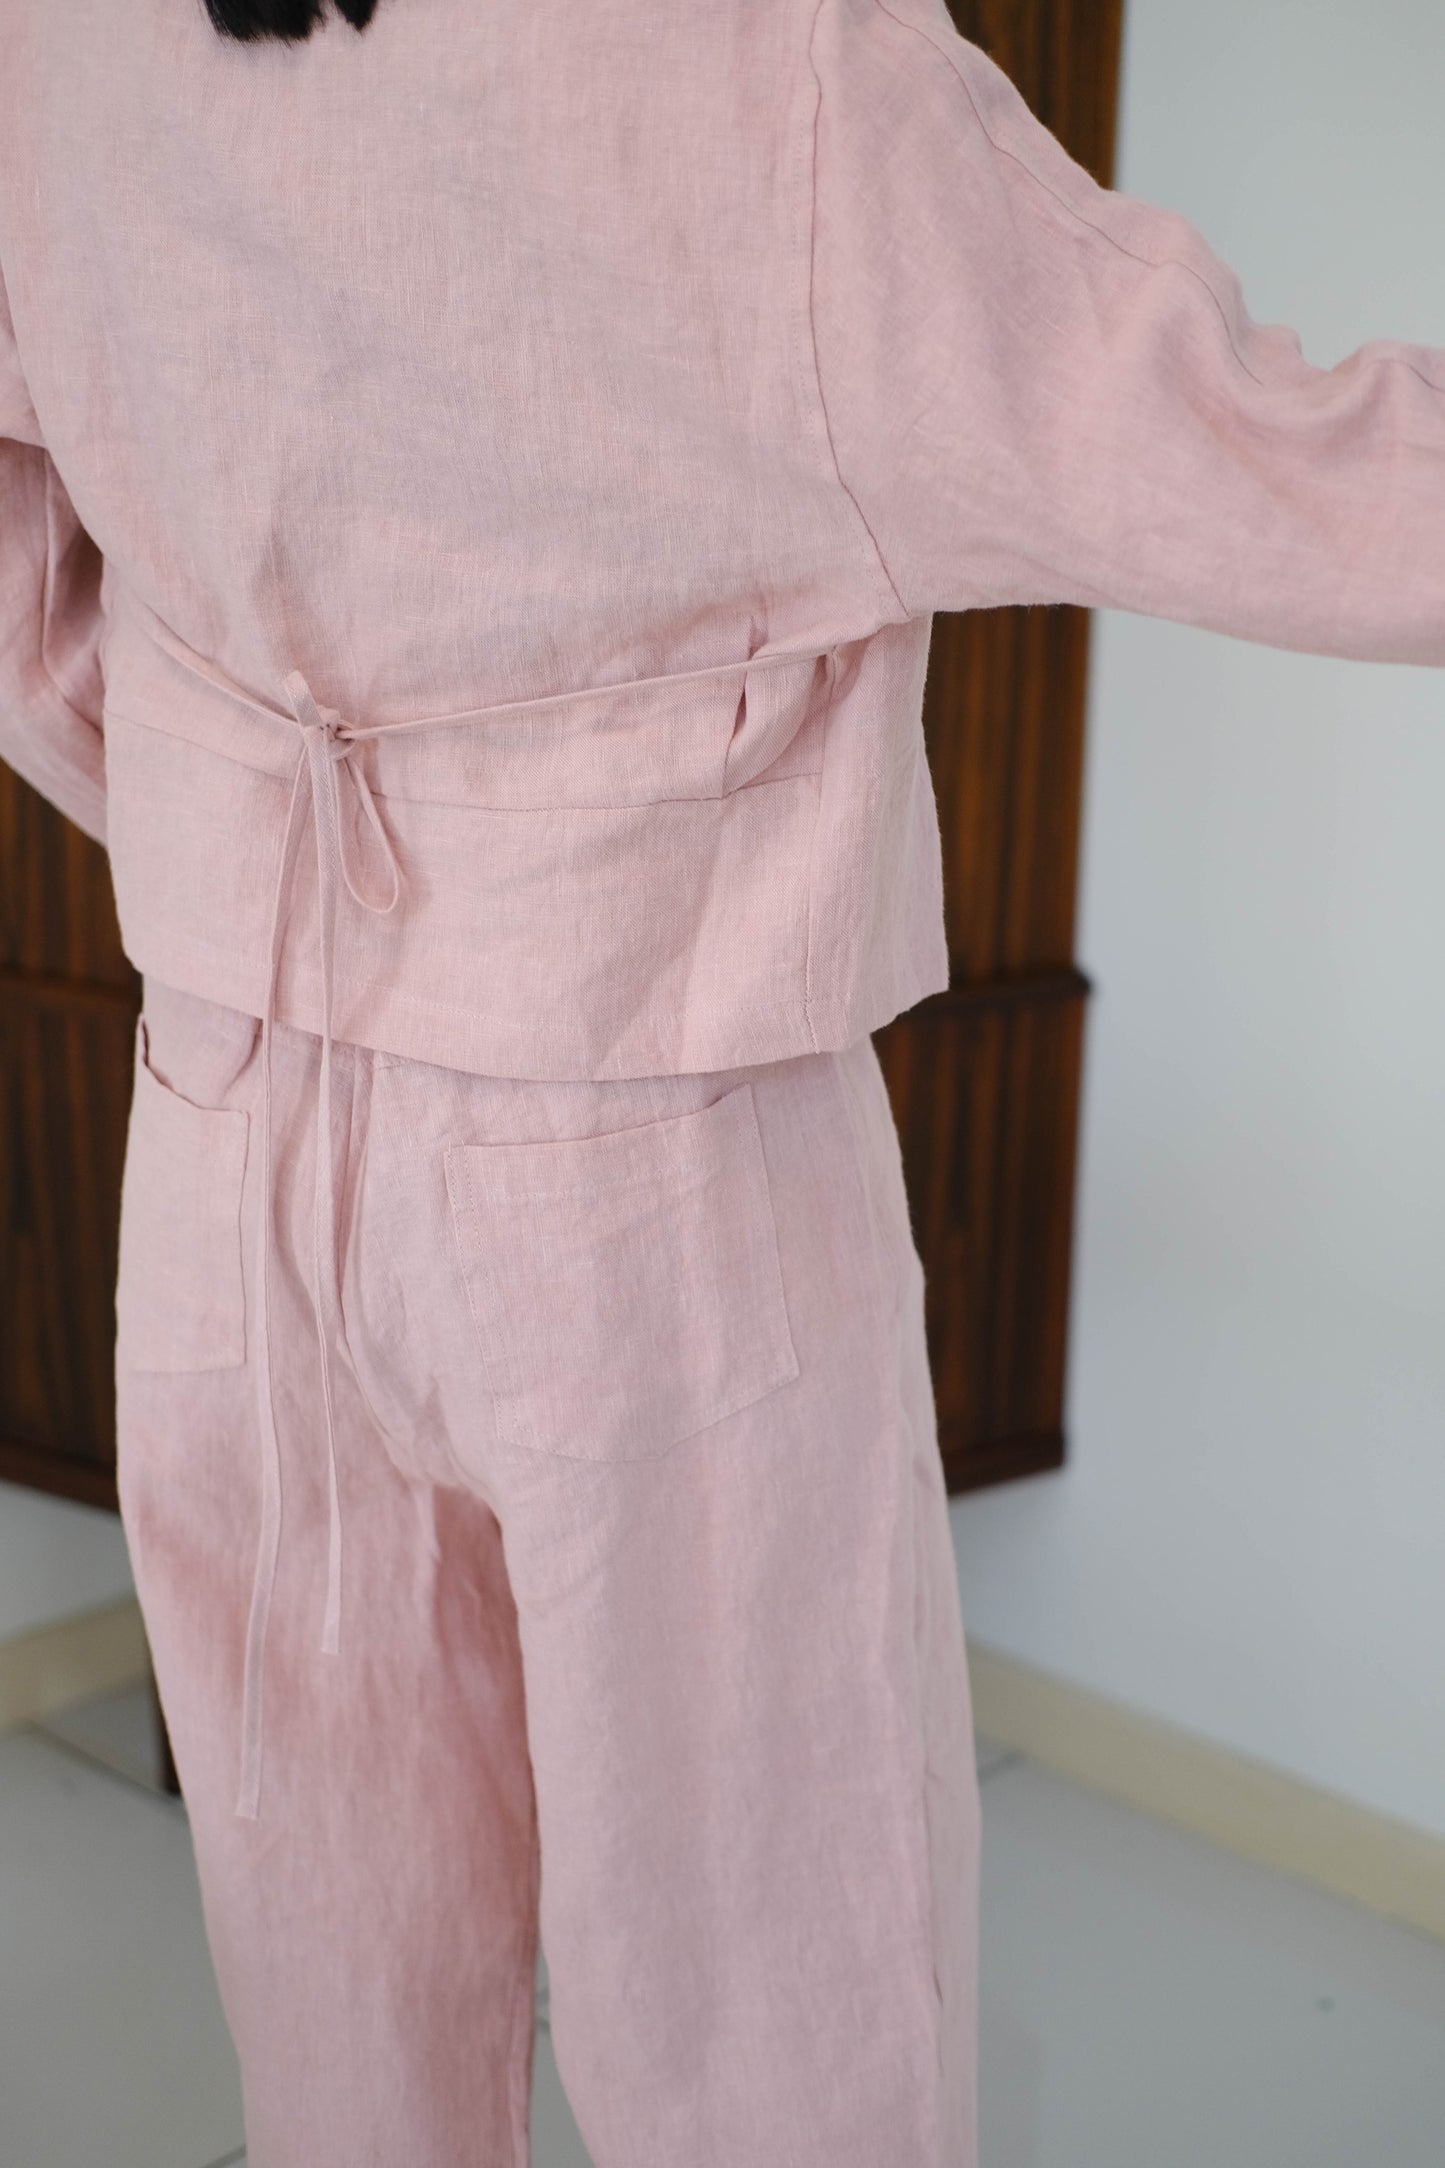 Semi-elastic linen trousers cherry blossom pink